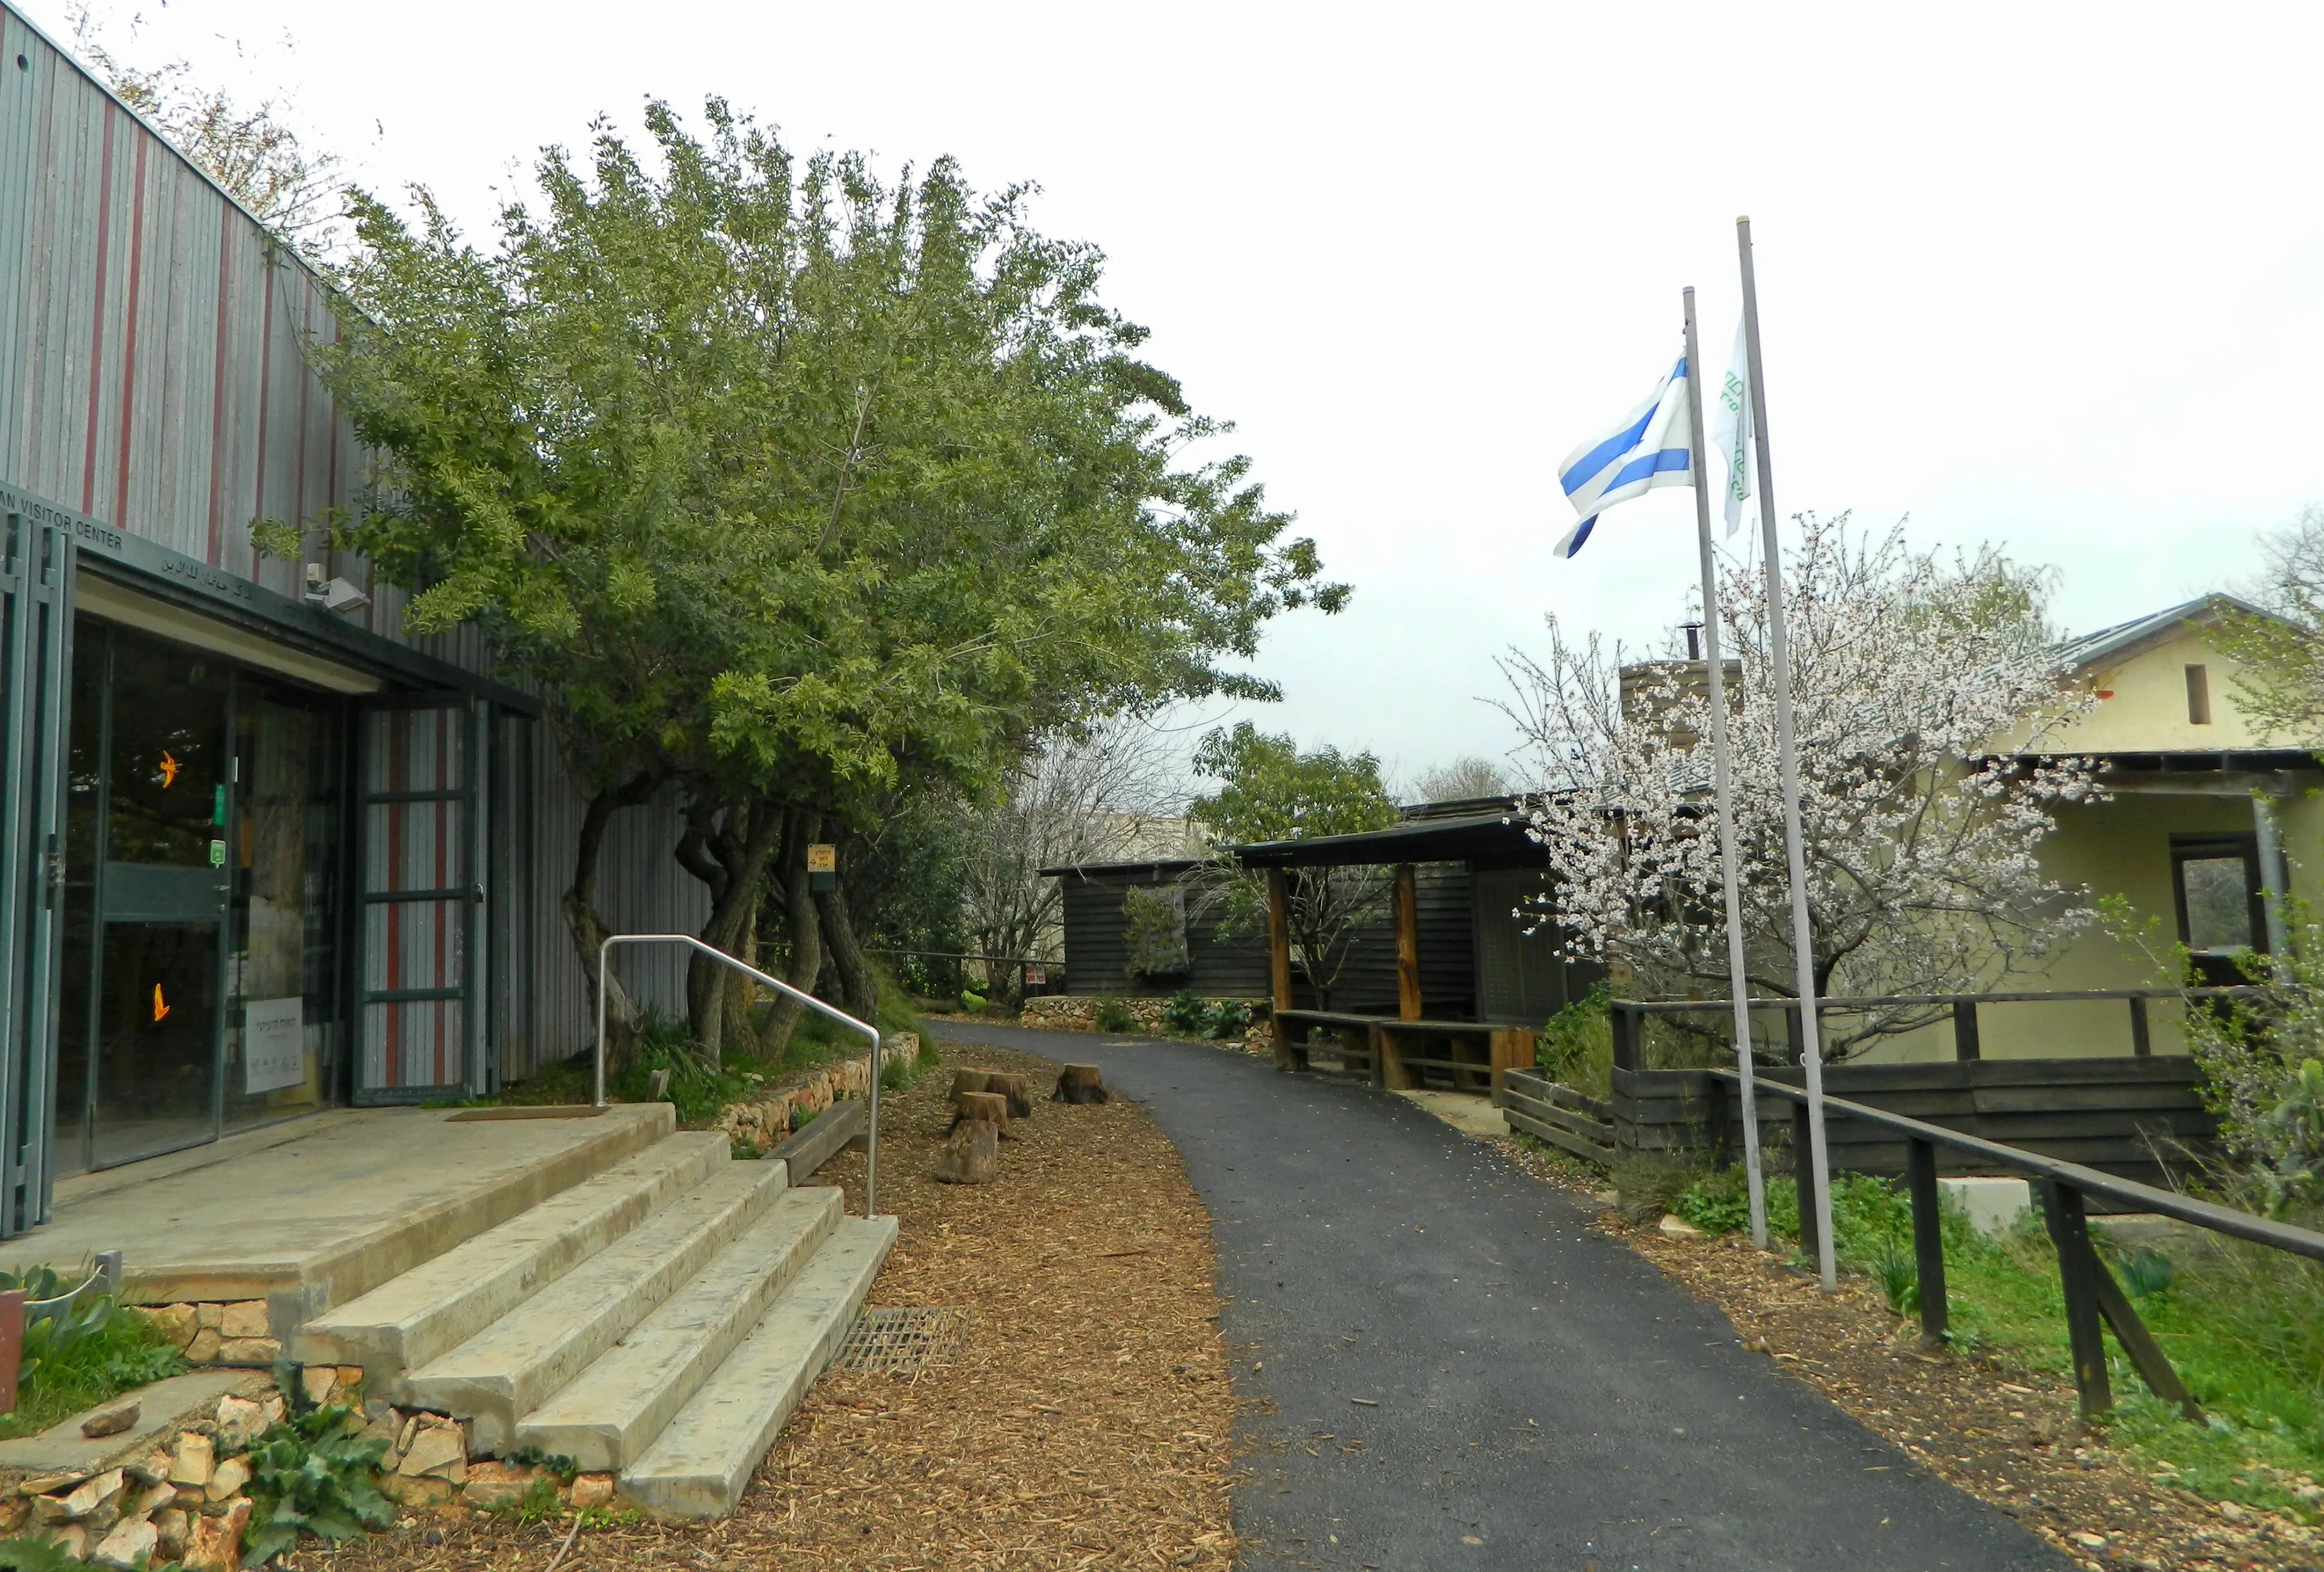 Jerusalem Bird Observatory in Israel, Middle East | Observatories & Planetariums - Rated 3.8